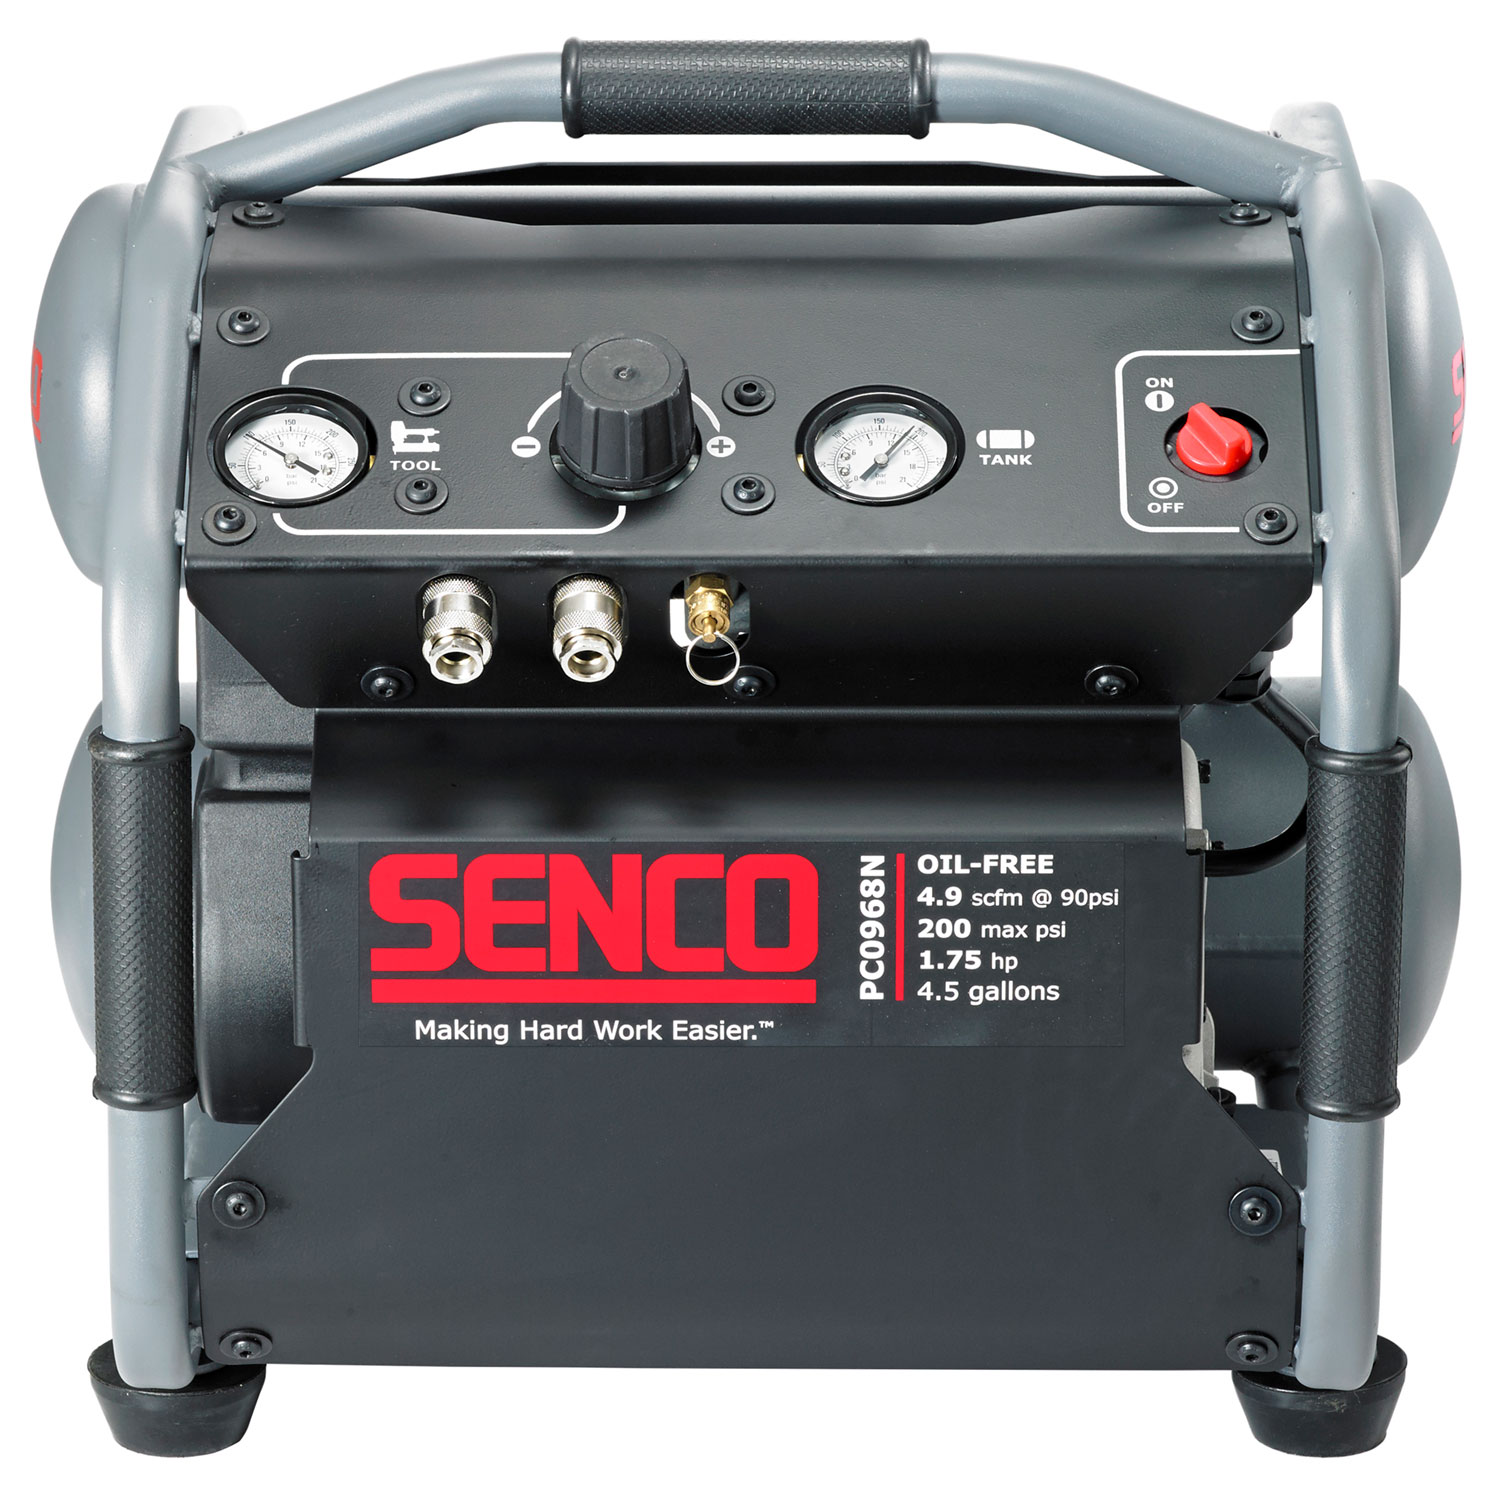 Senco® Launches 200 PSI Portable Compressor Line For Professional Shop and Jobsite Applications